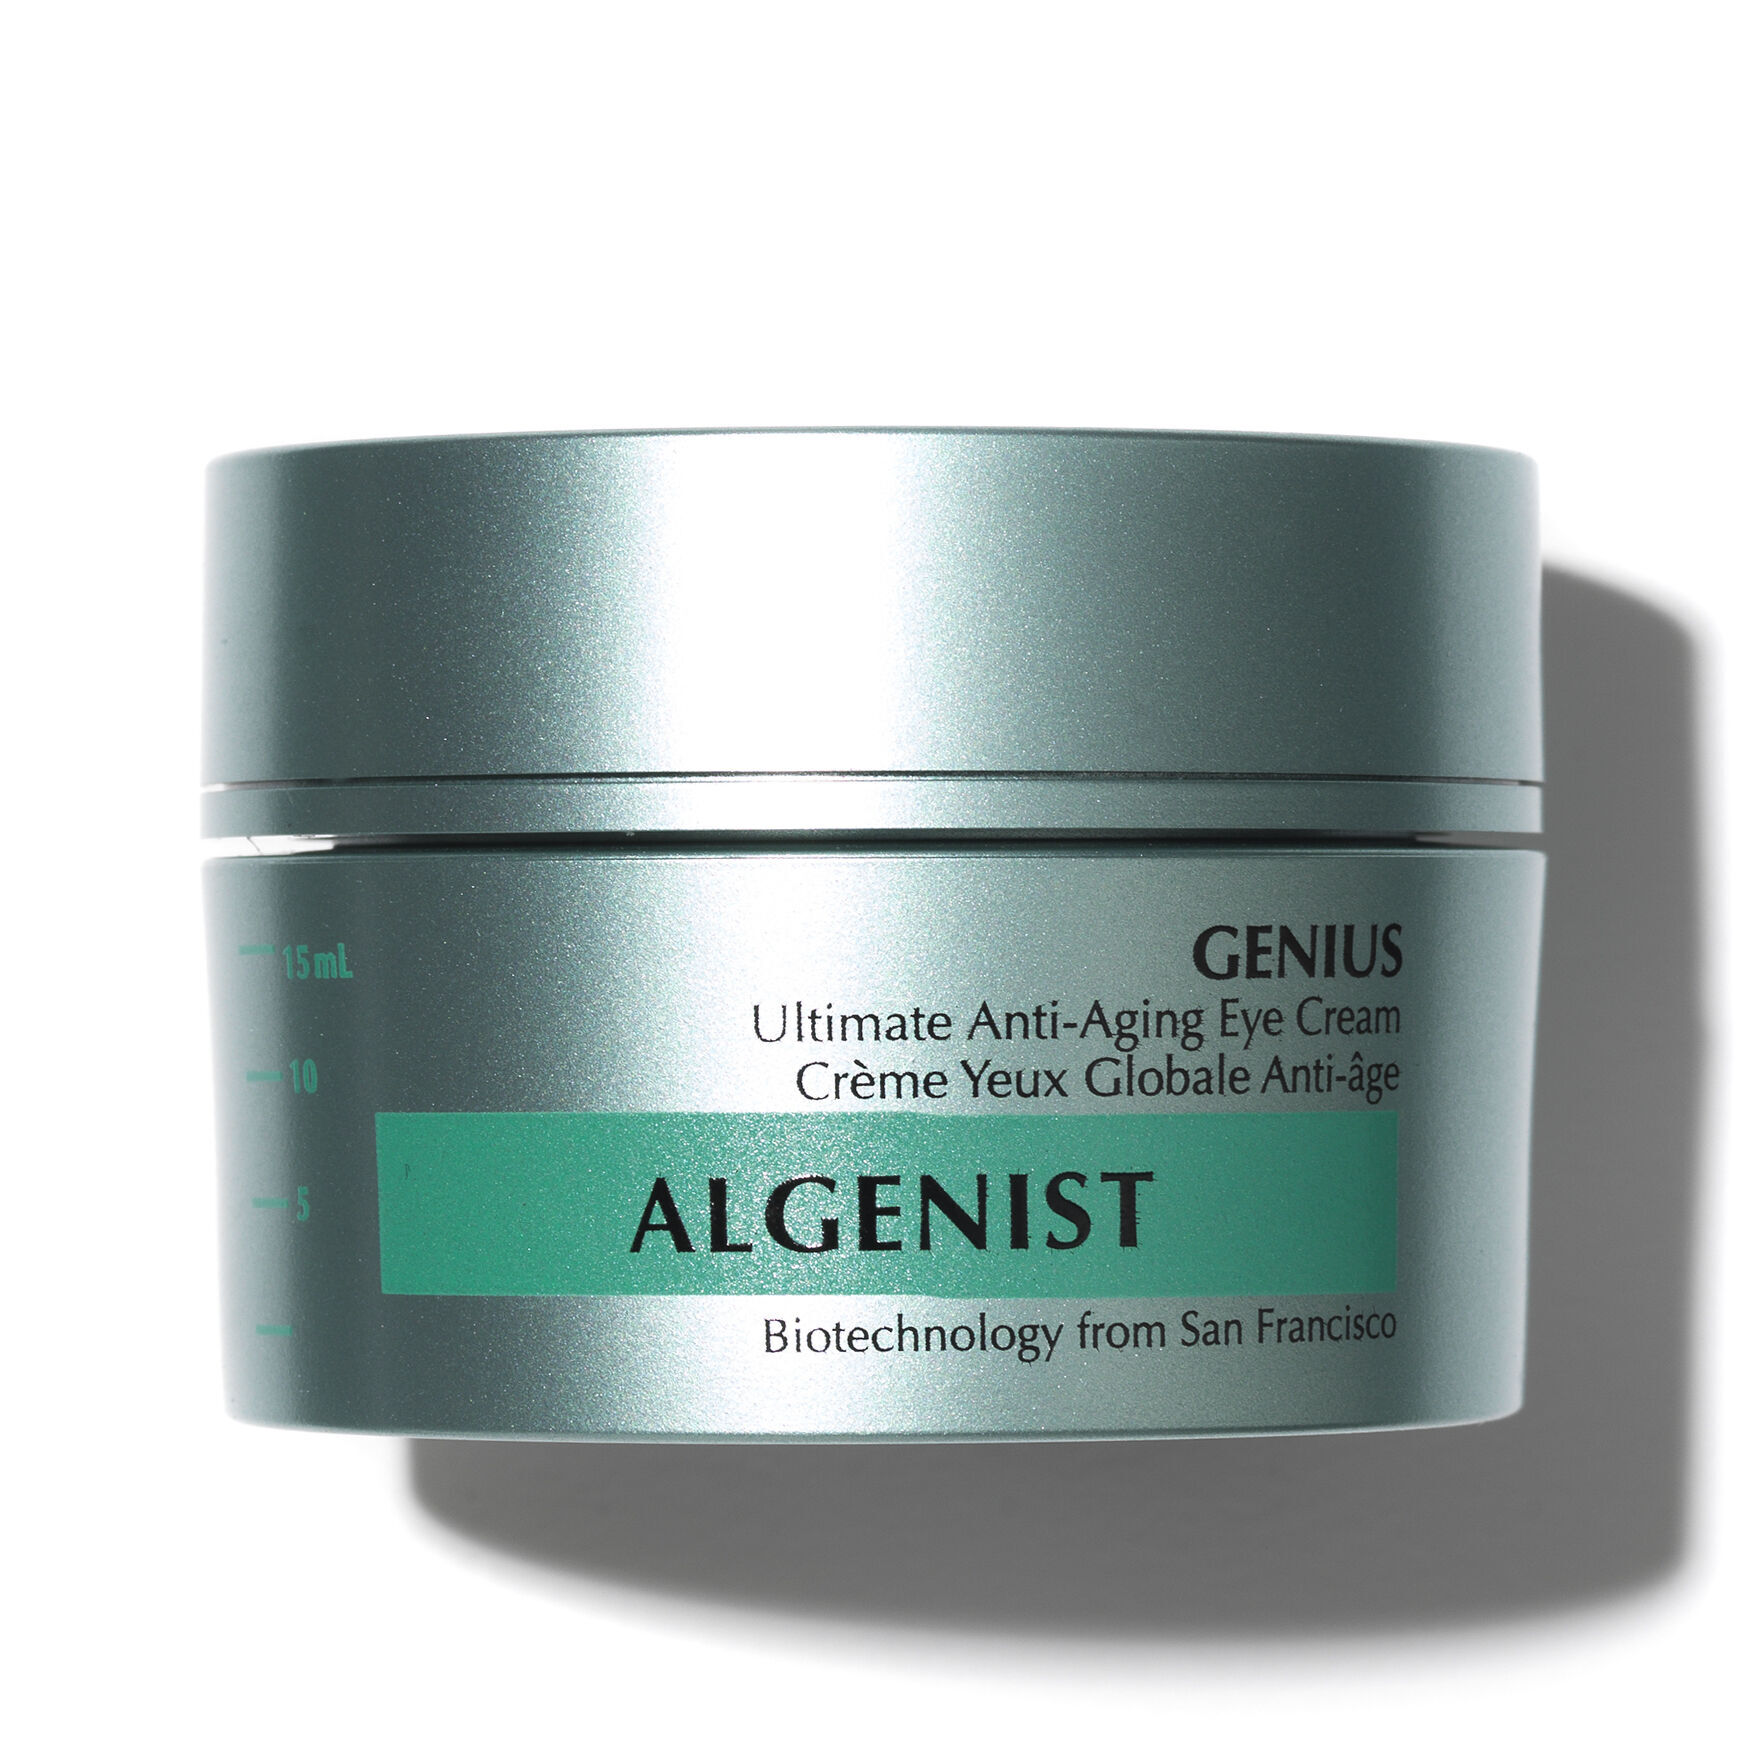 Algenist - Genius Anti-Aging Eye Cream by Algenist